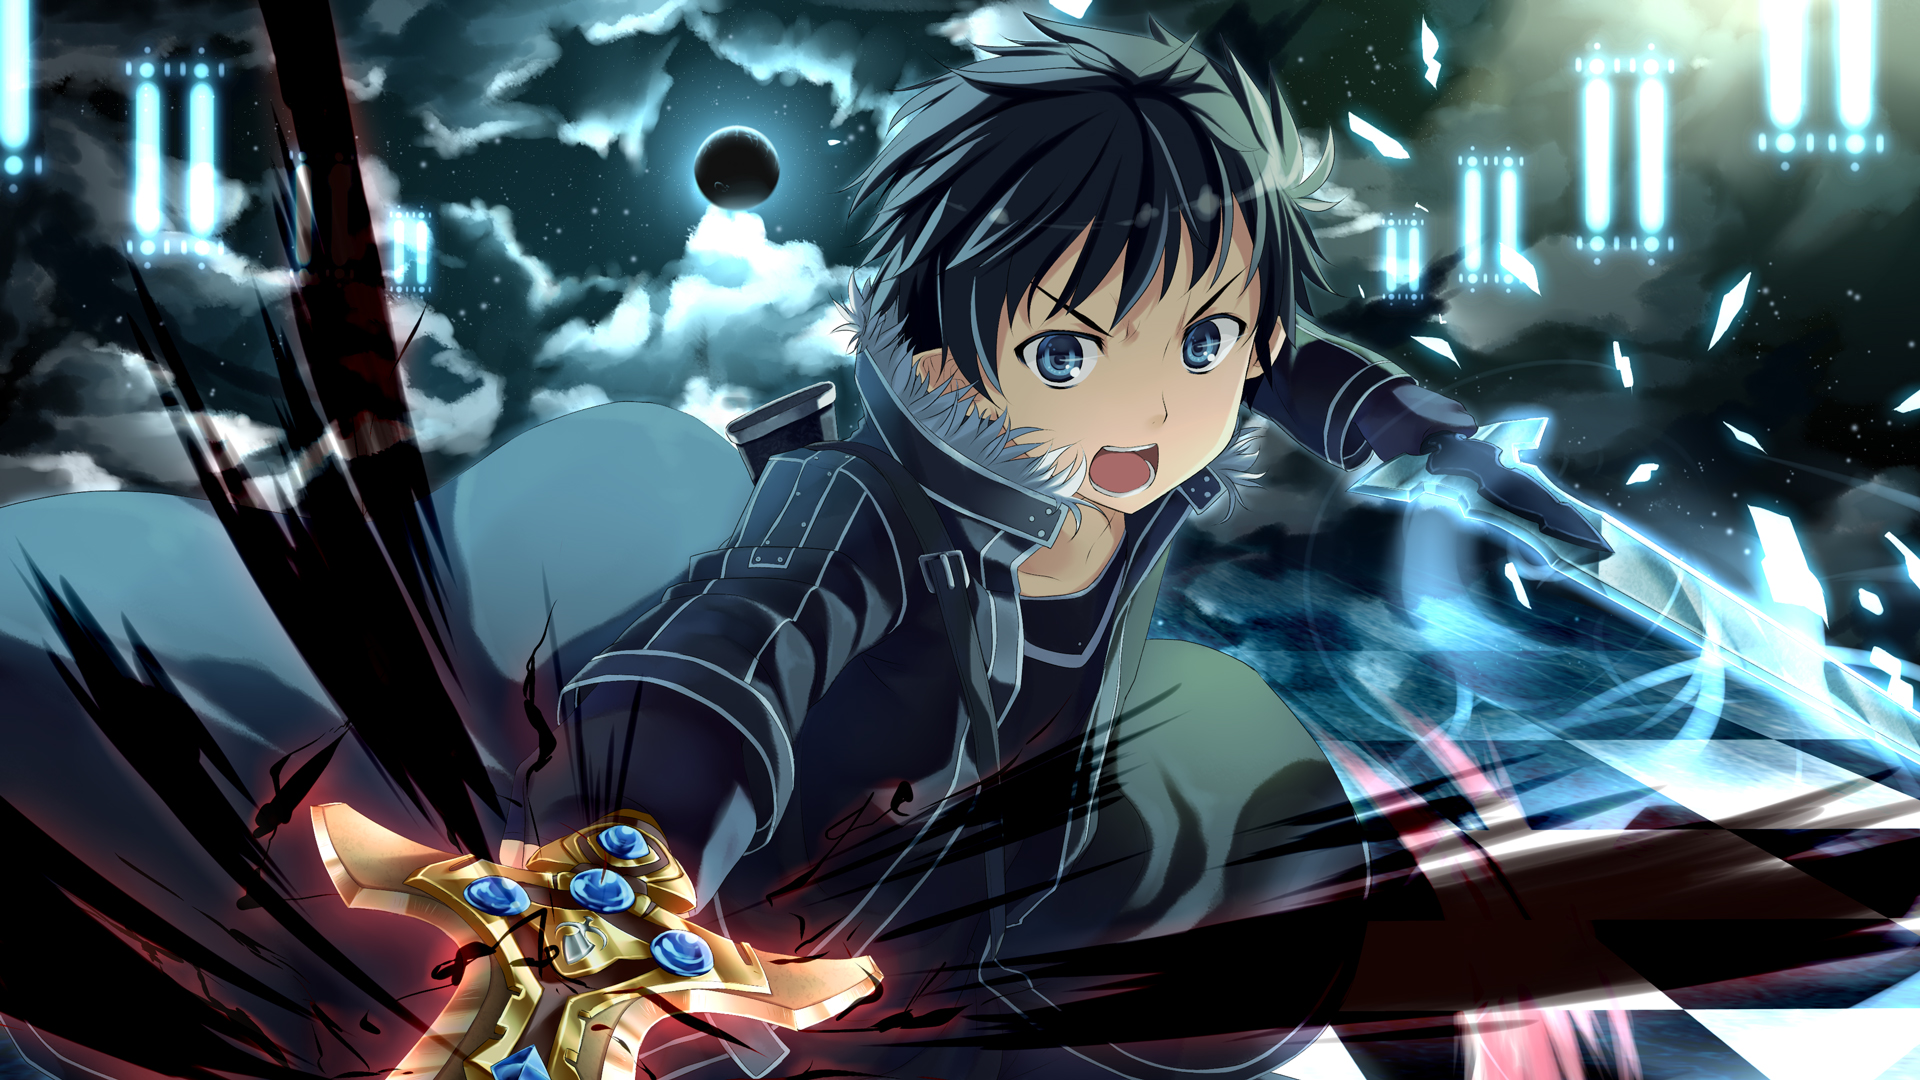 Sword Art Online SAO Anime wallpaper background 1920x1080